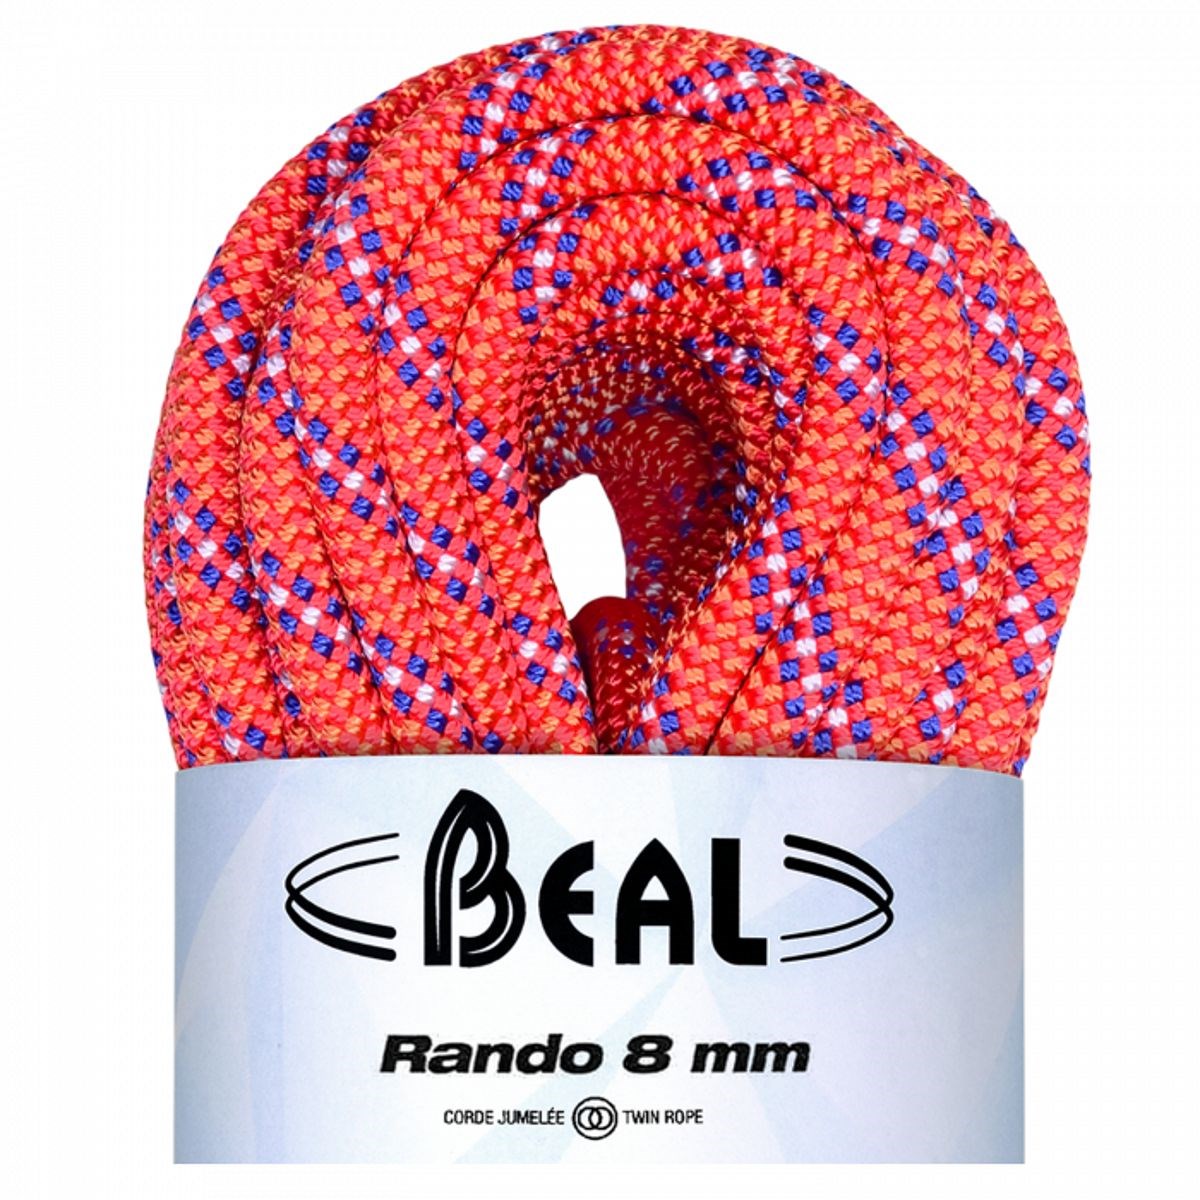 Lano Beal Rando Clasic 8 mm orange Beal 10025894 L-11